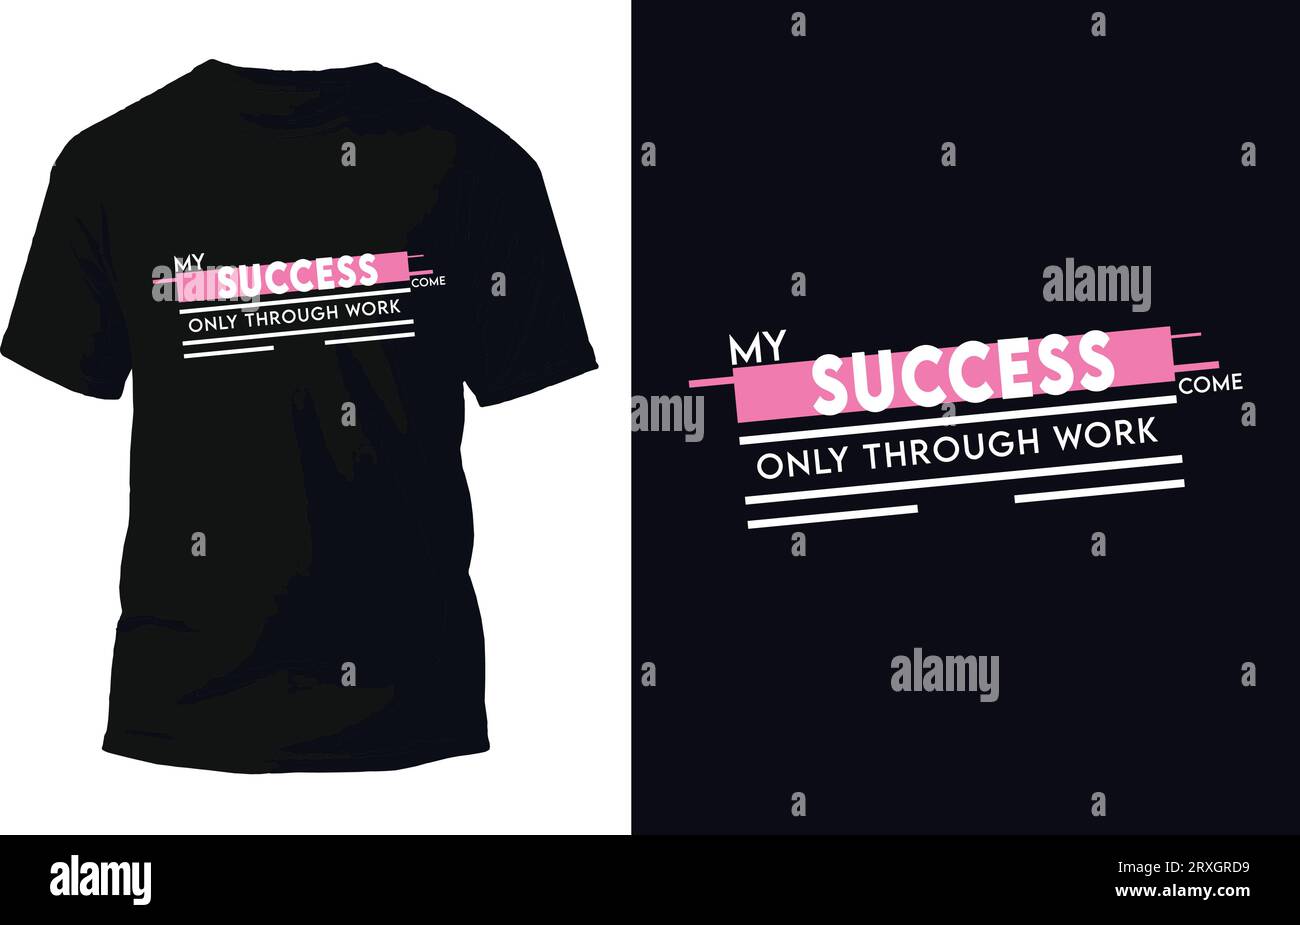 My Success Come Only Through Work T Shirt design Vector Stock Vector